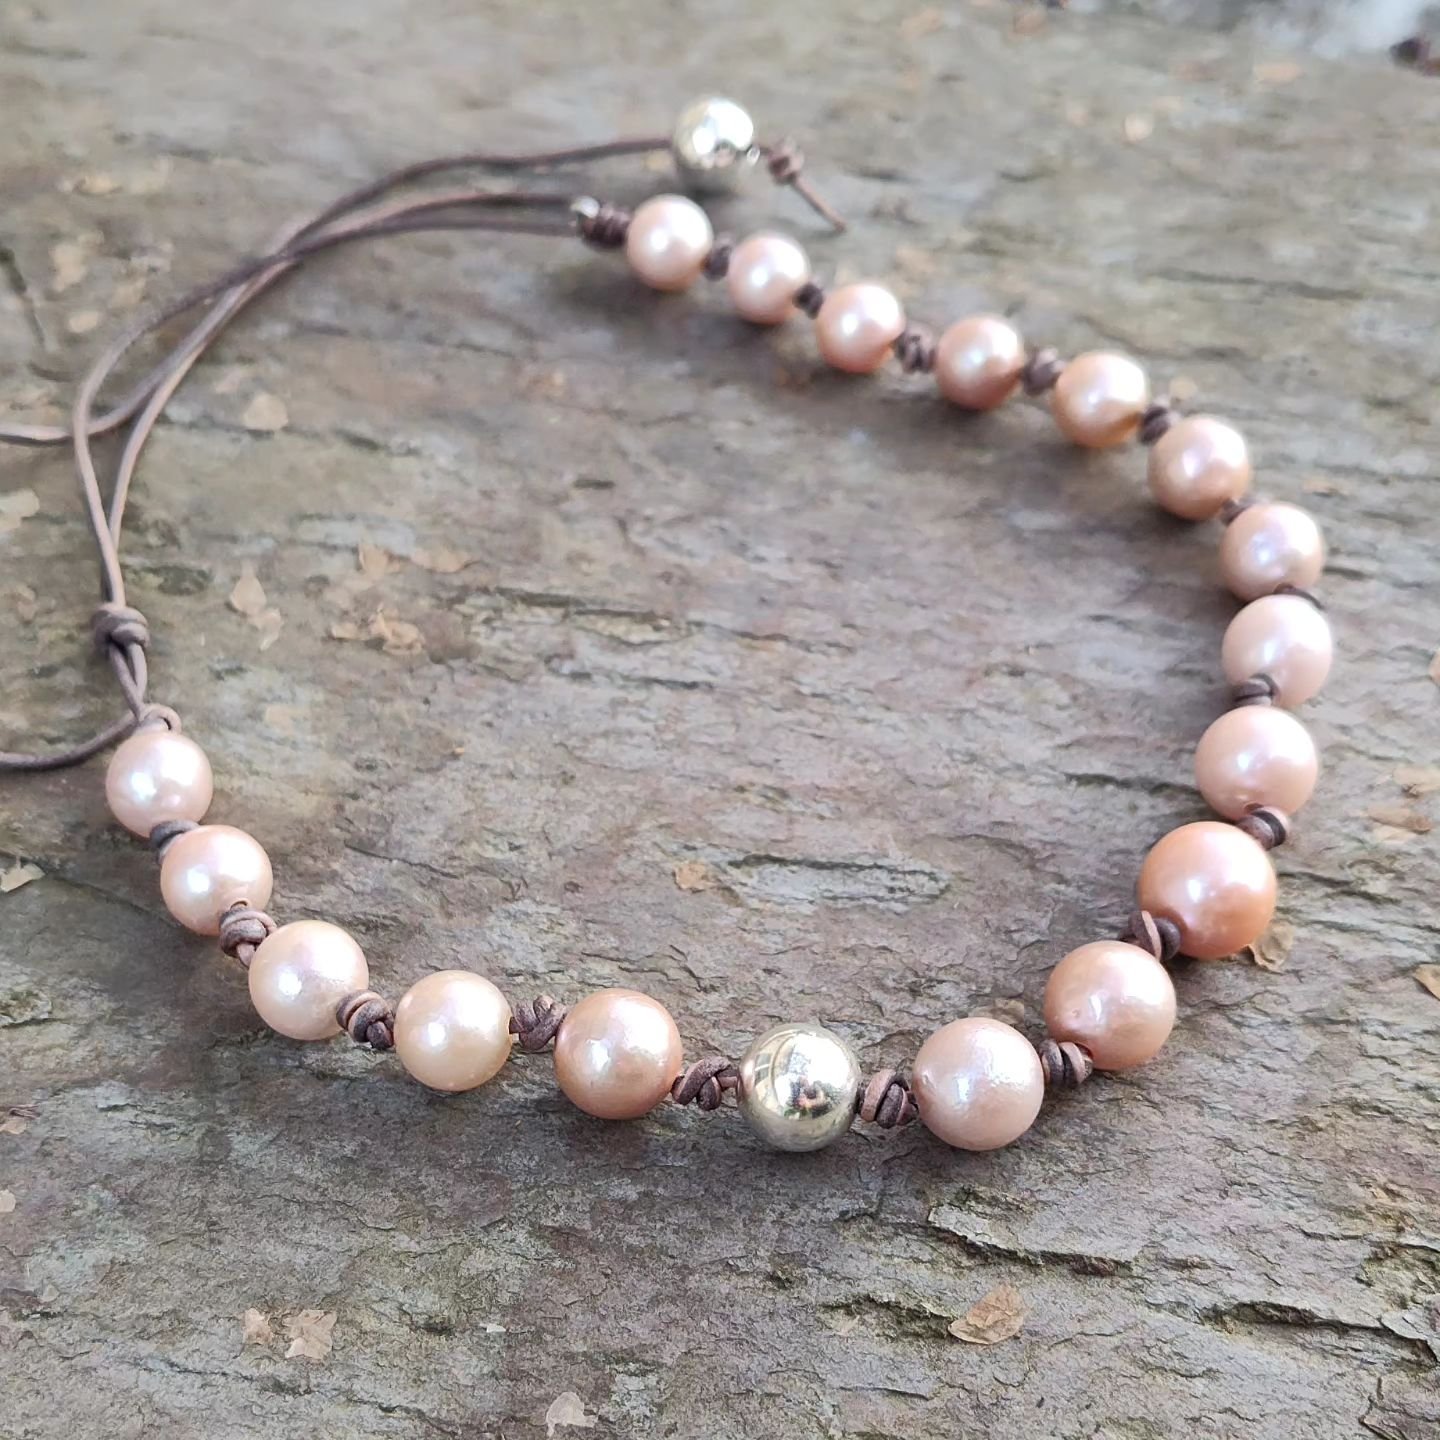 Knotted leather and pearl necklace with silver bead.
.
#leatherjewelry #pearlsoverdiamonds #pearljewelry #beachvibes #treasureseeker #artjewelrybyadrienne #adriennecantler #handcraftedjewelry